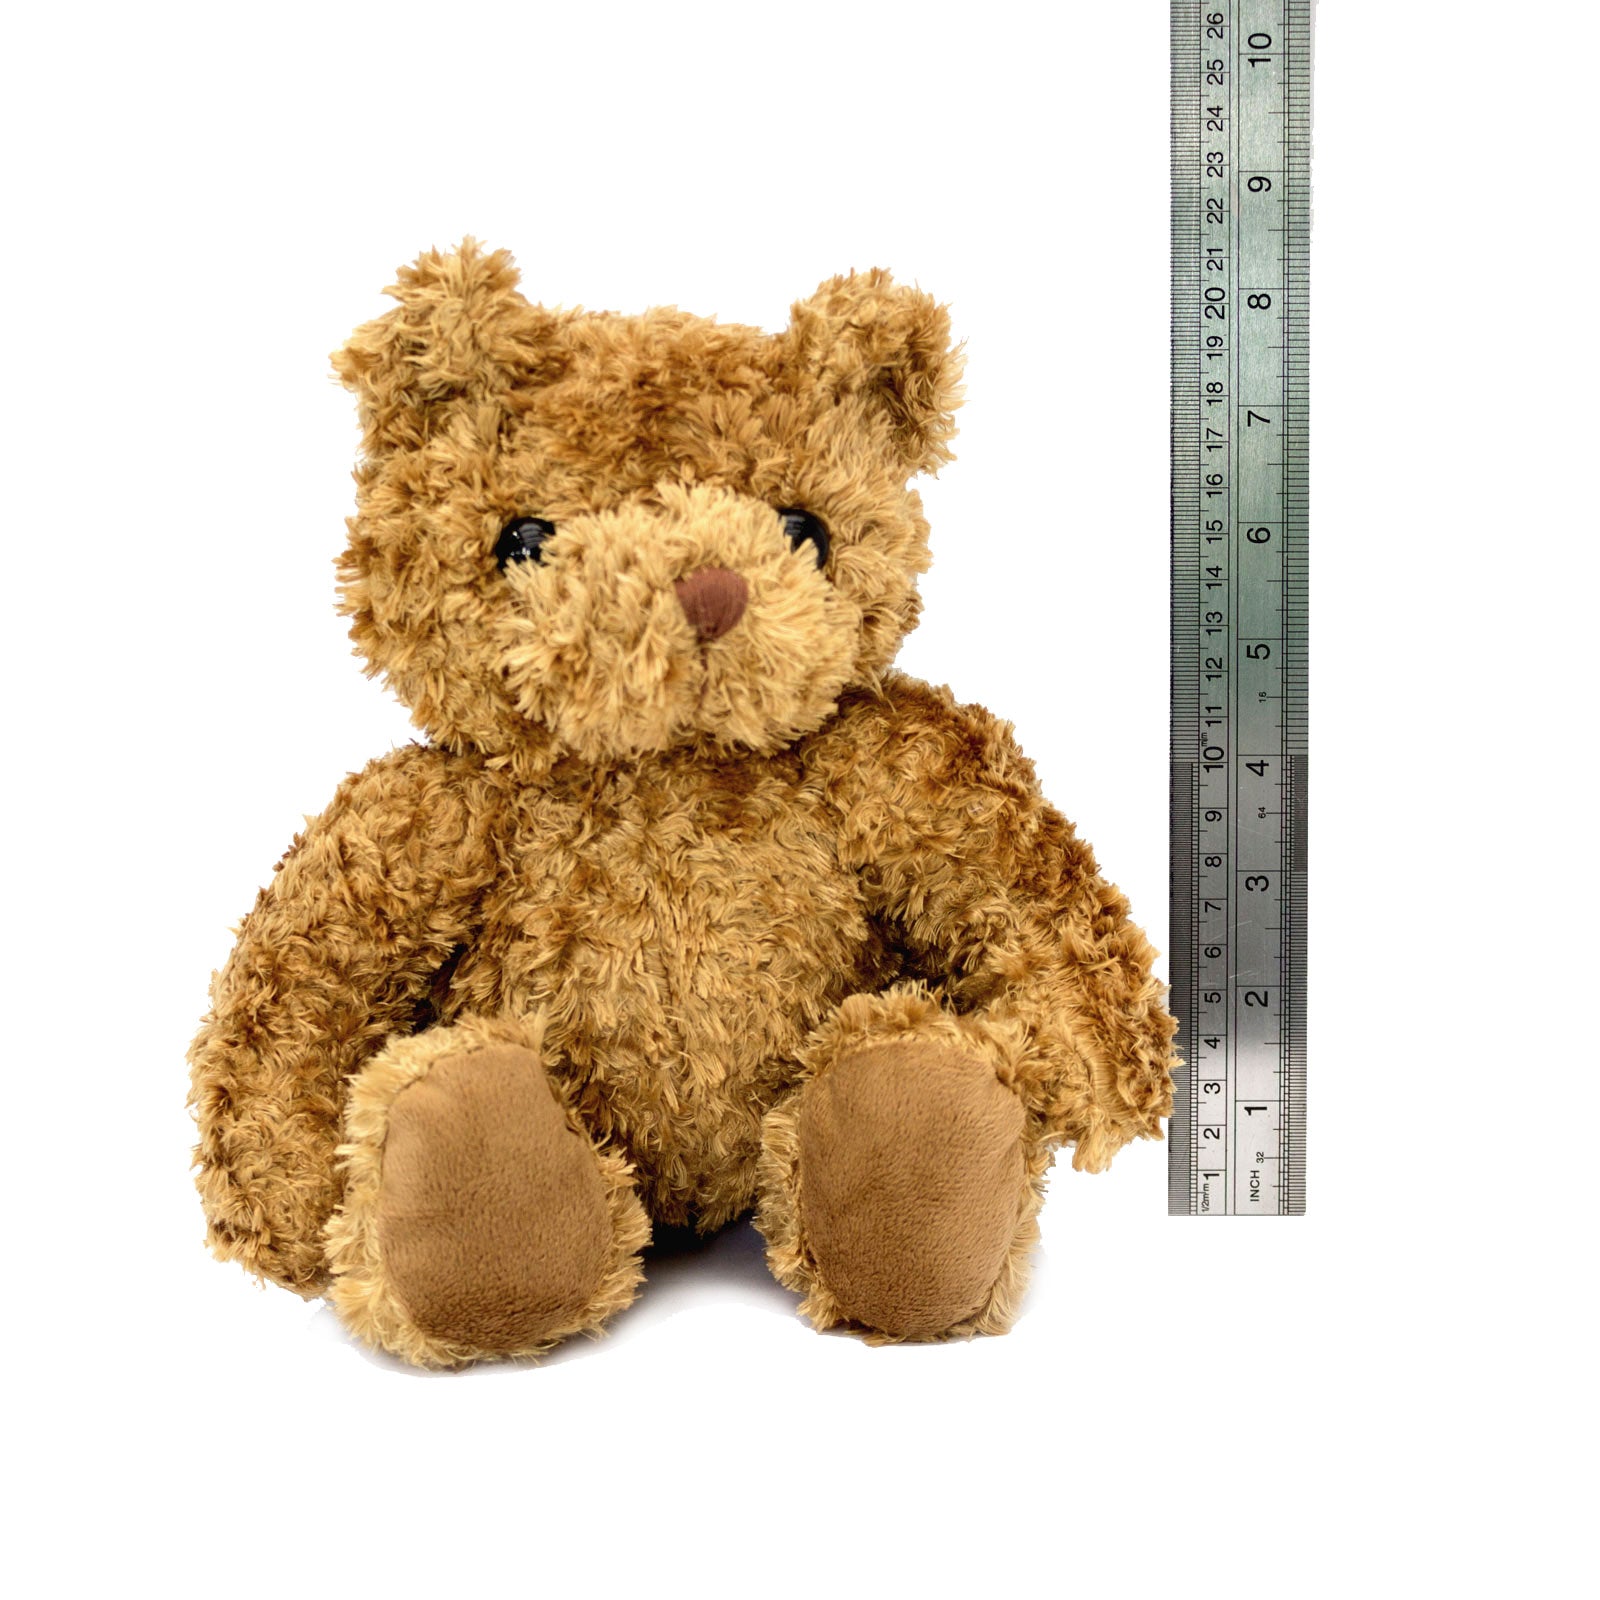 Get Well Soon Amalia - Teddy Bear